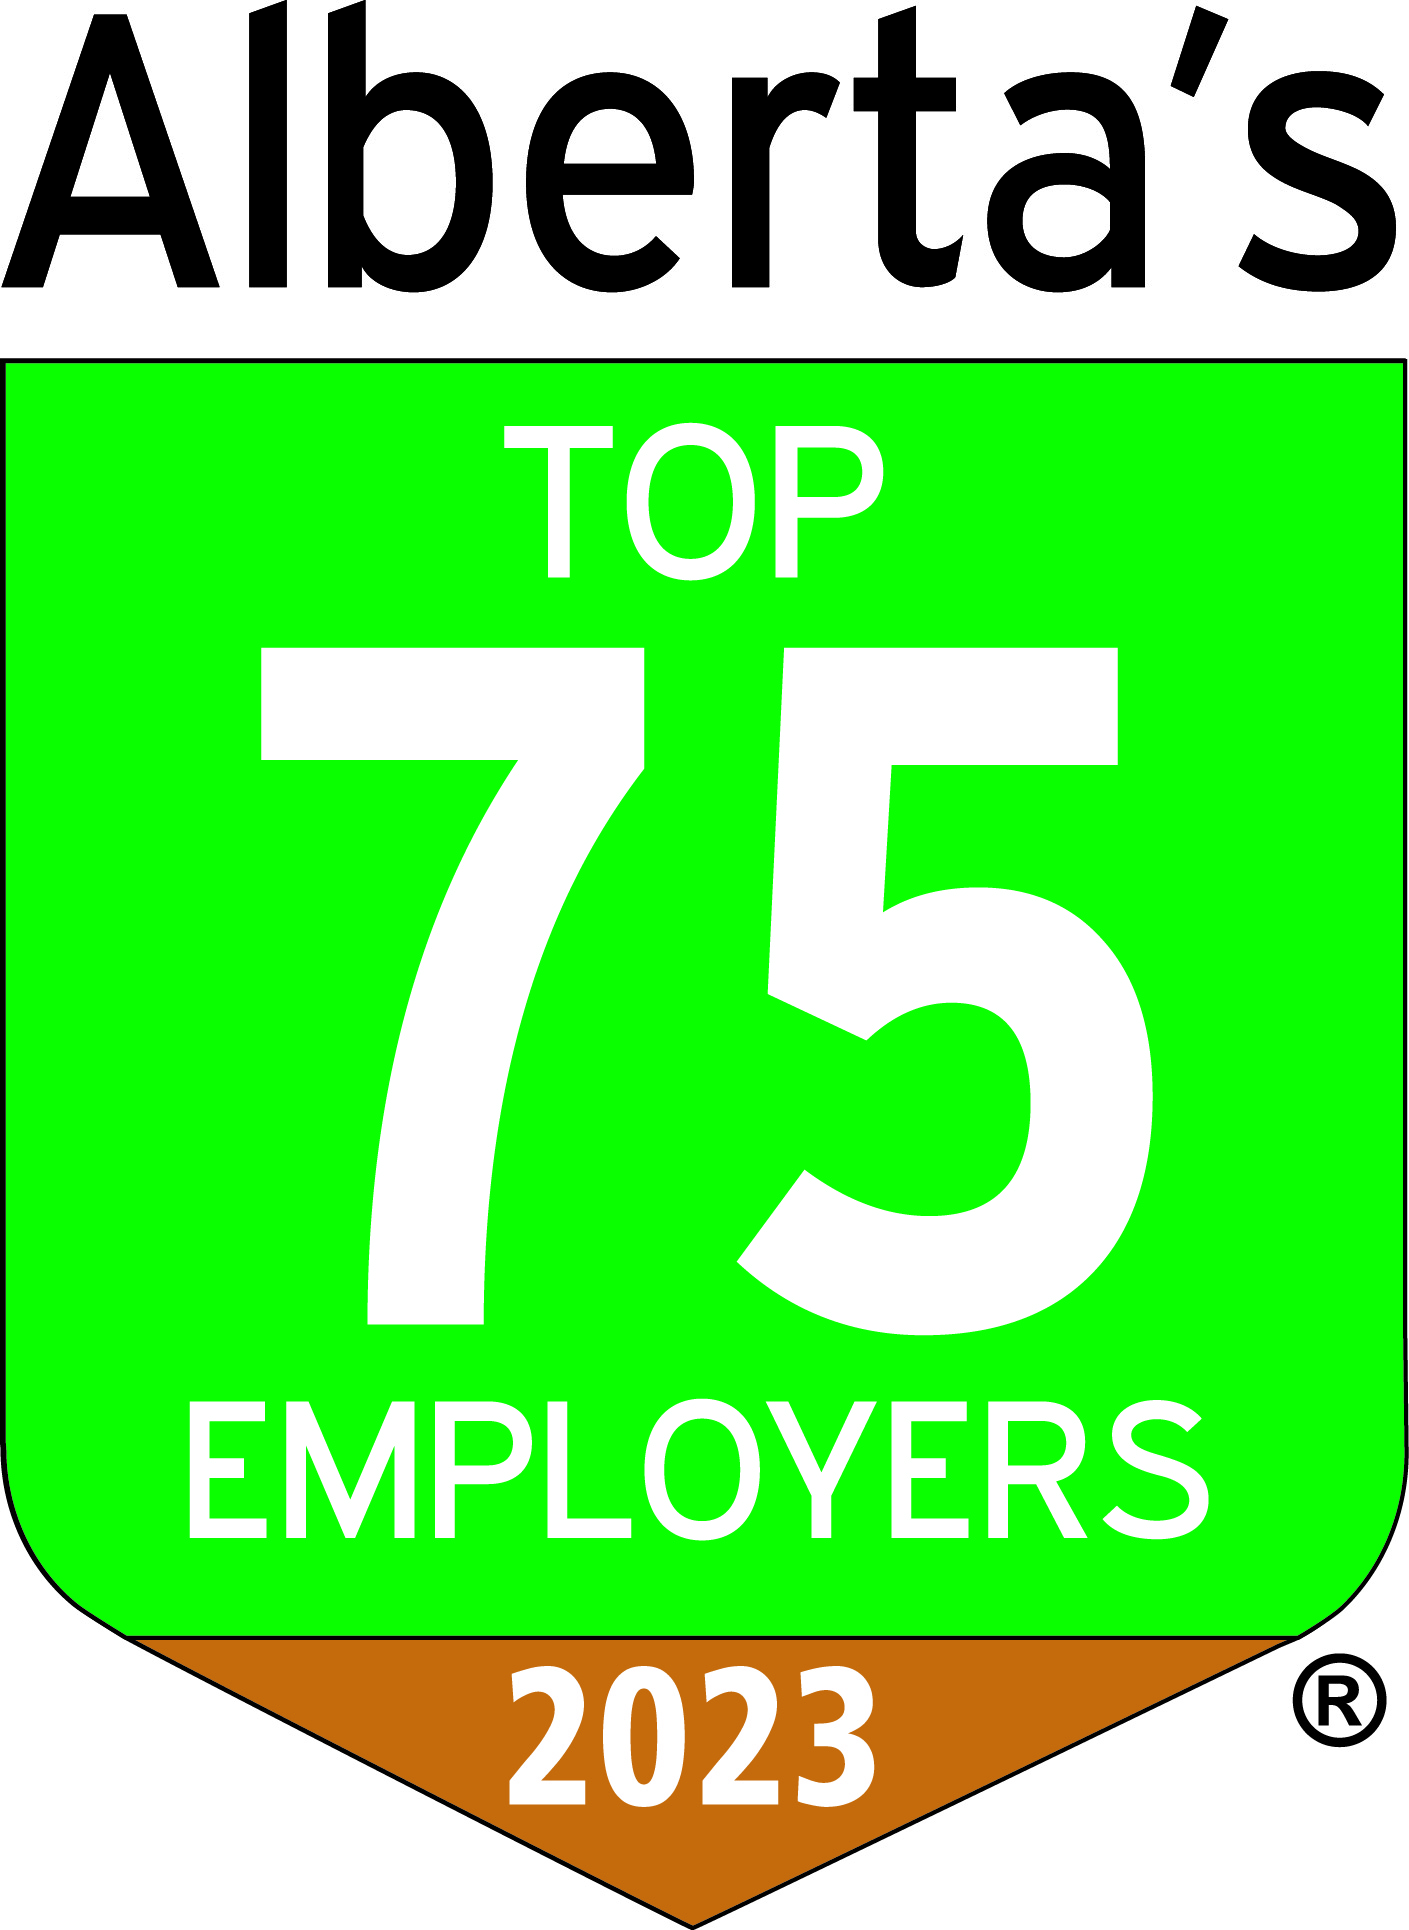 Alberta's Top 75 employers logo